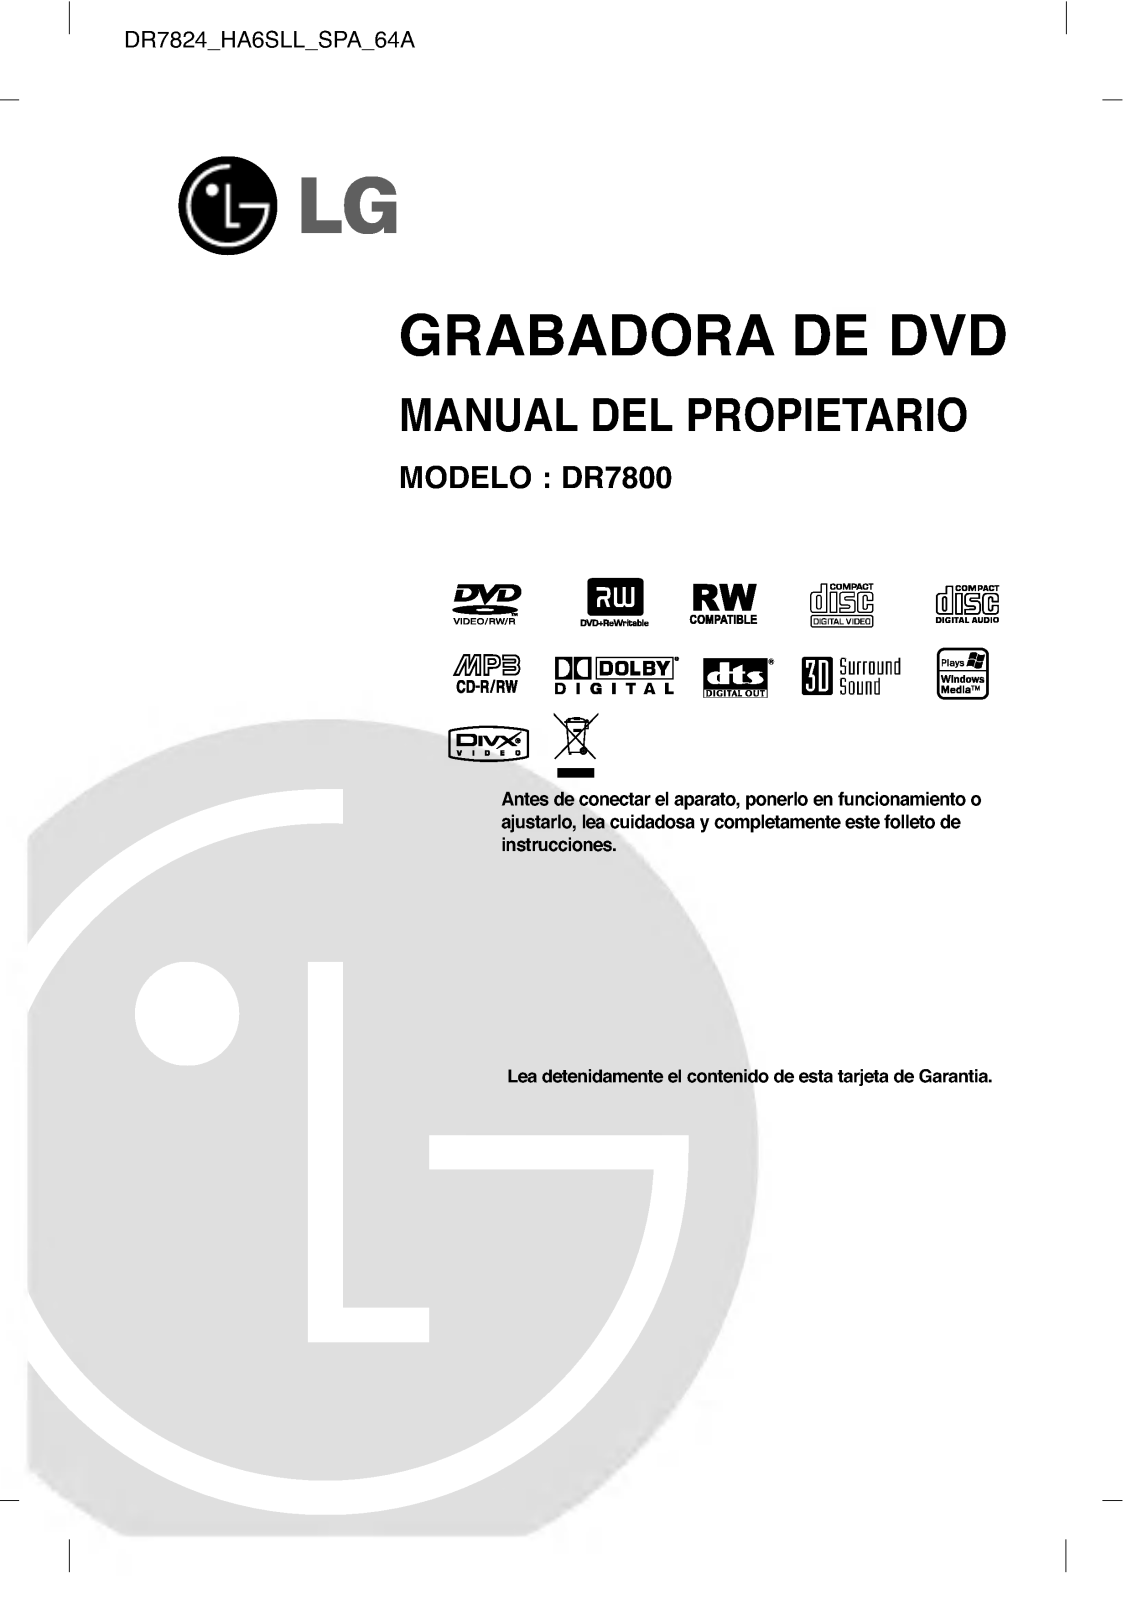 LG DR7824NP1C User Manual